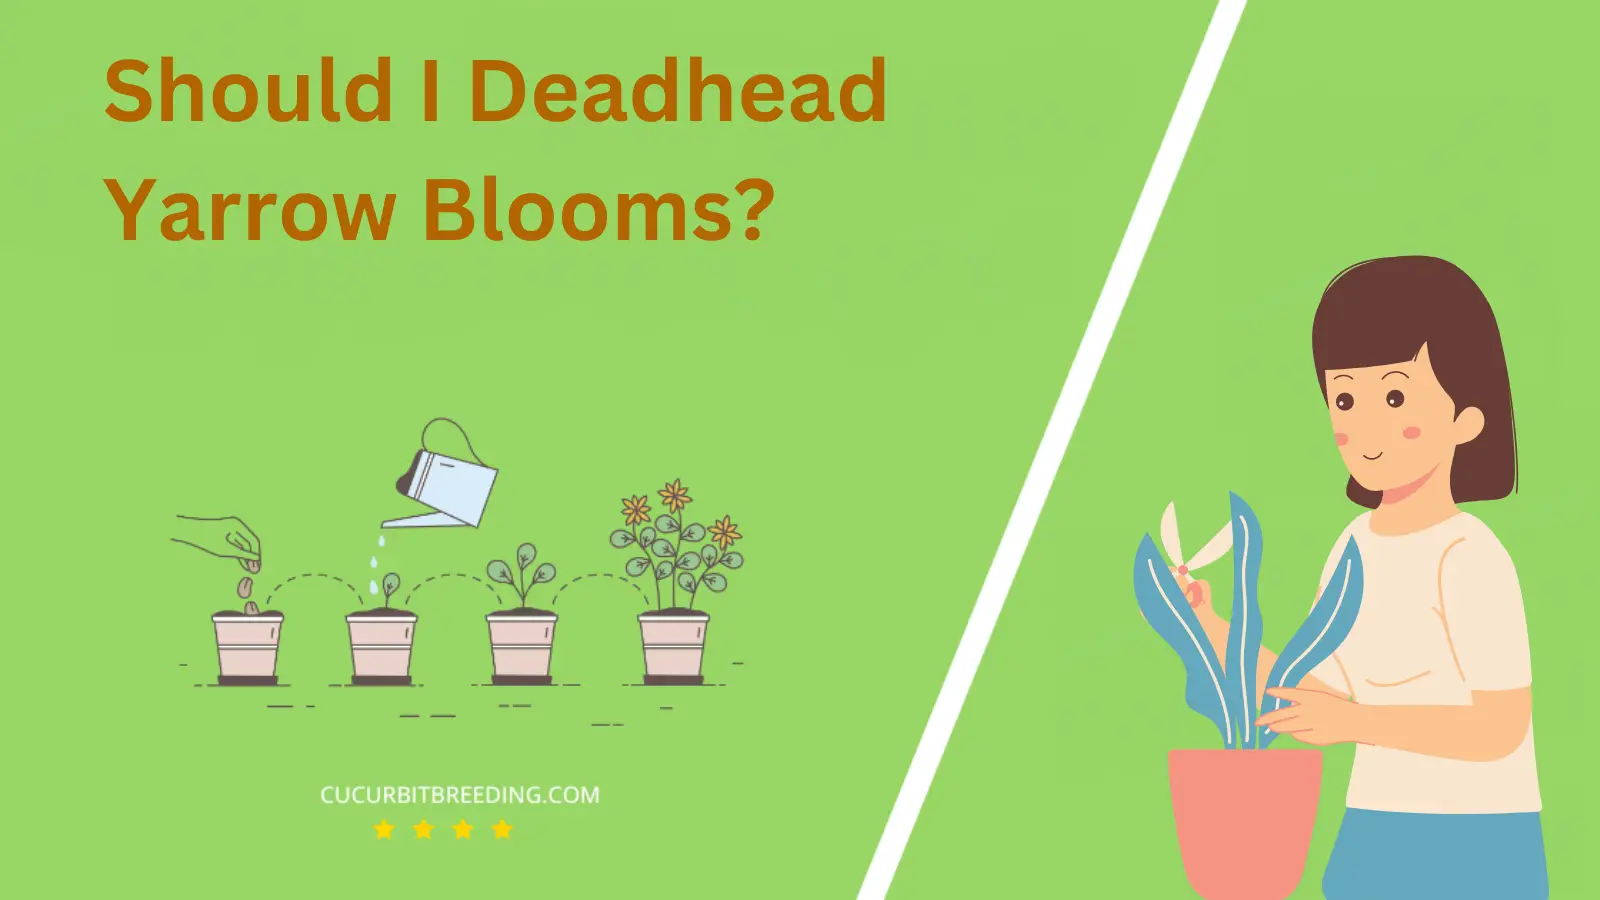 Should I Deadhead Yarrow Blooms?